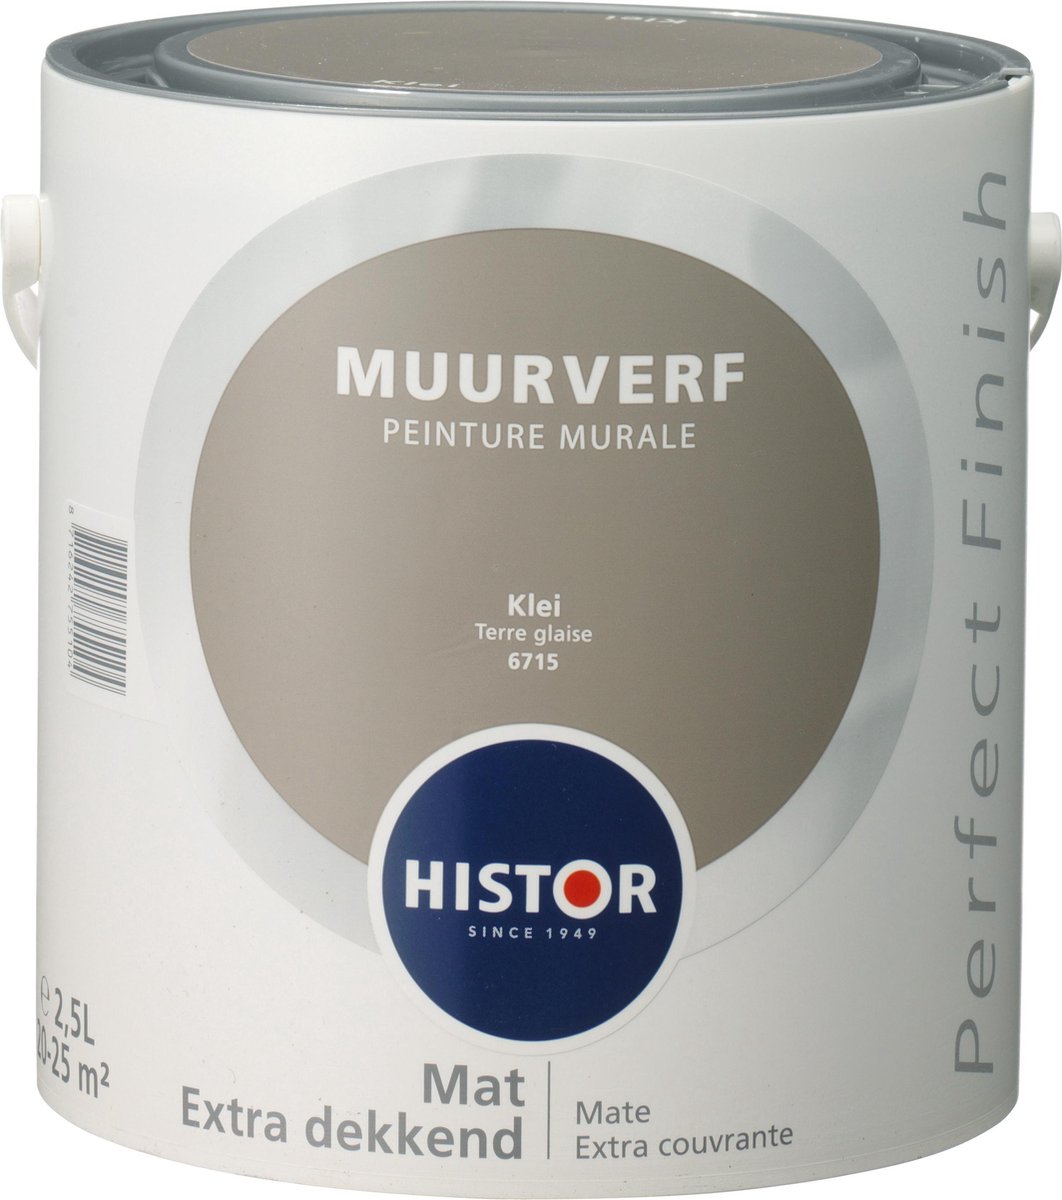 Histor Perfect Finish Muurverf Mat - 2,5 liter - Klei